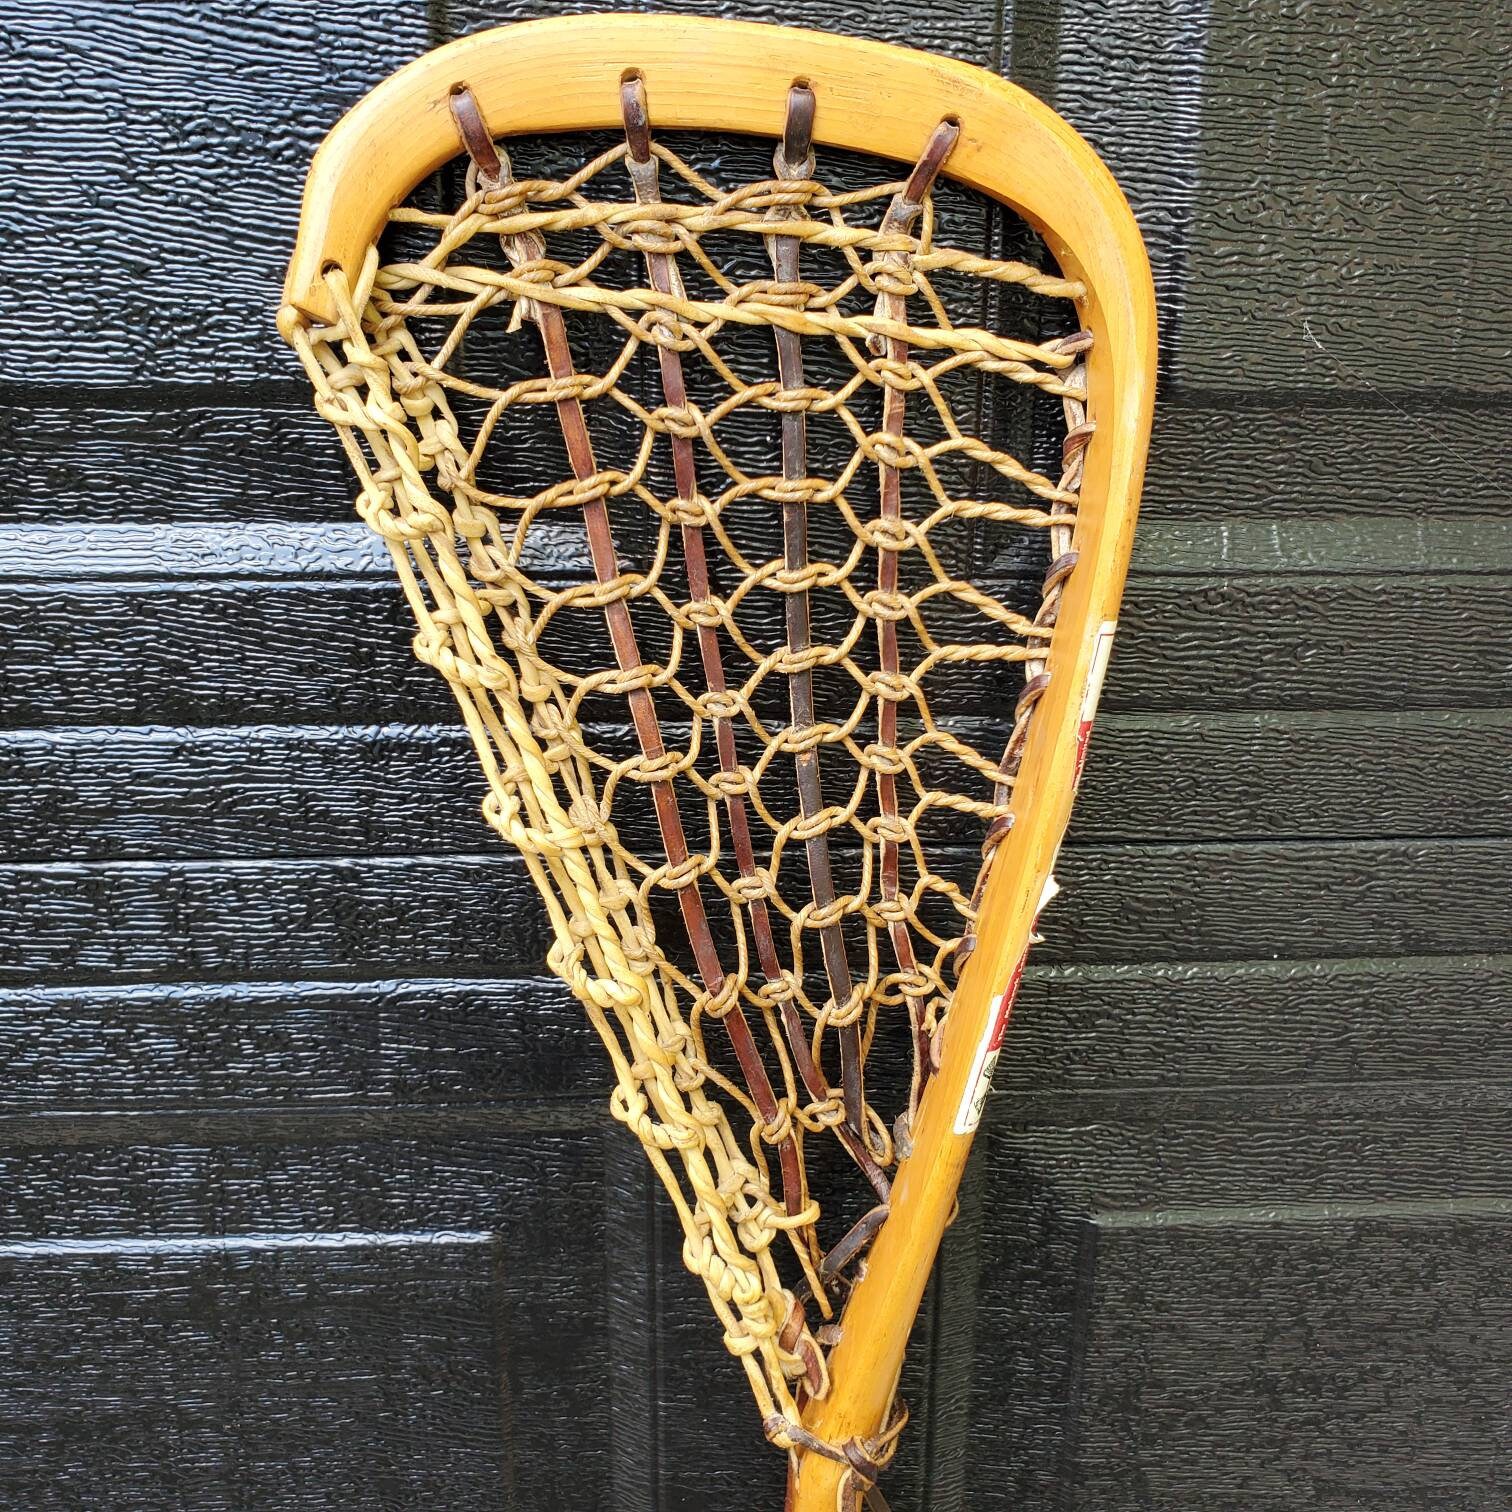 Rust -n- Relics - For sale Vintage wooden lacrosse stick